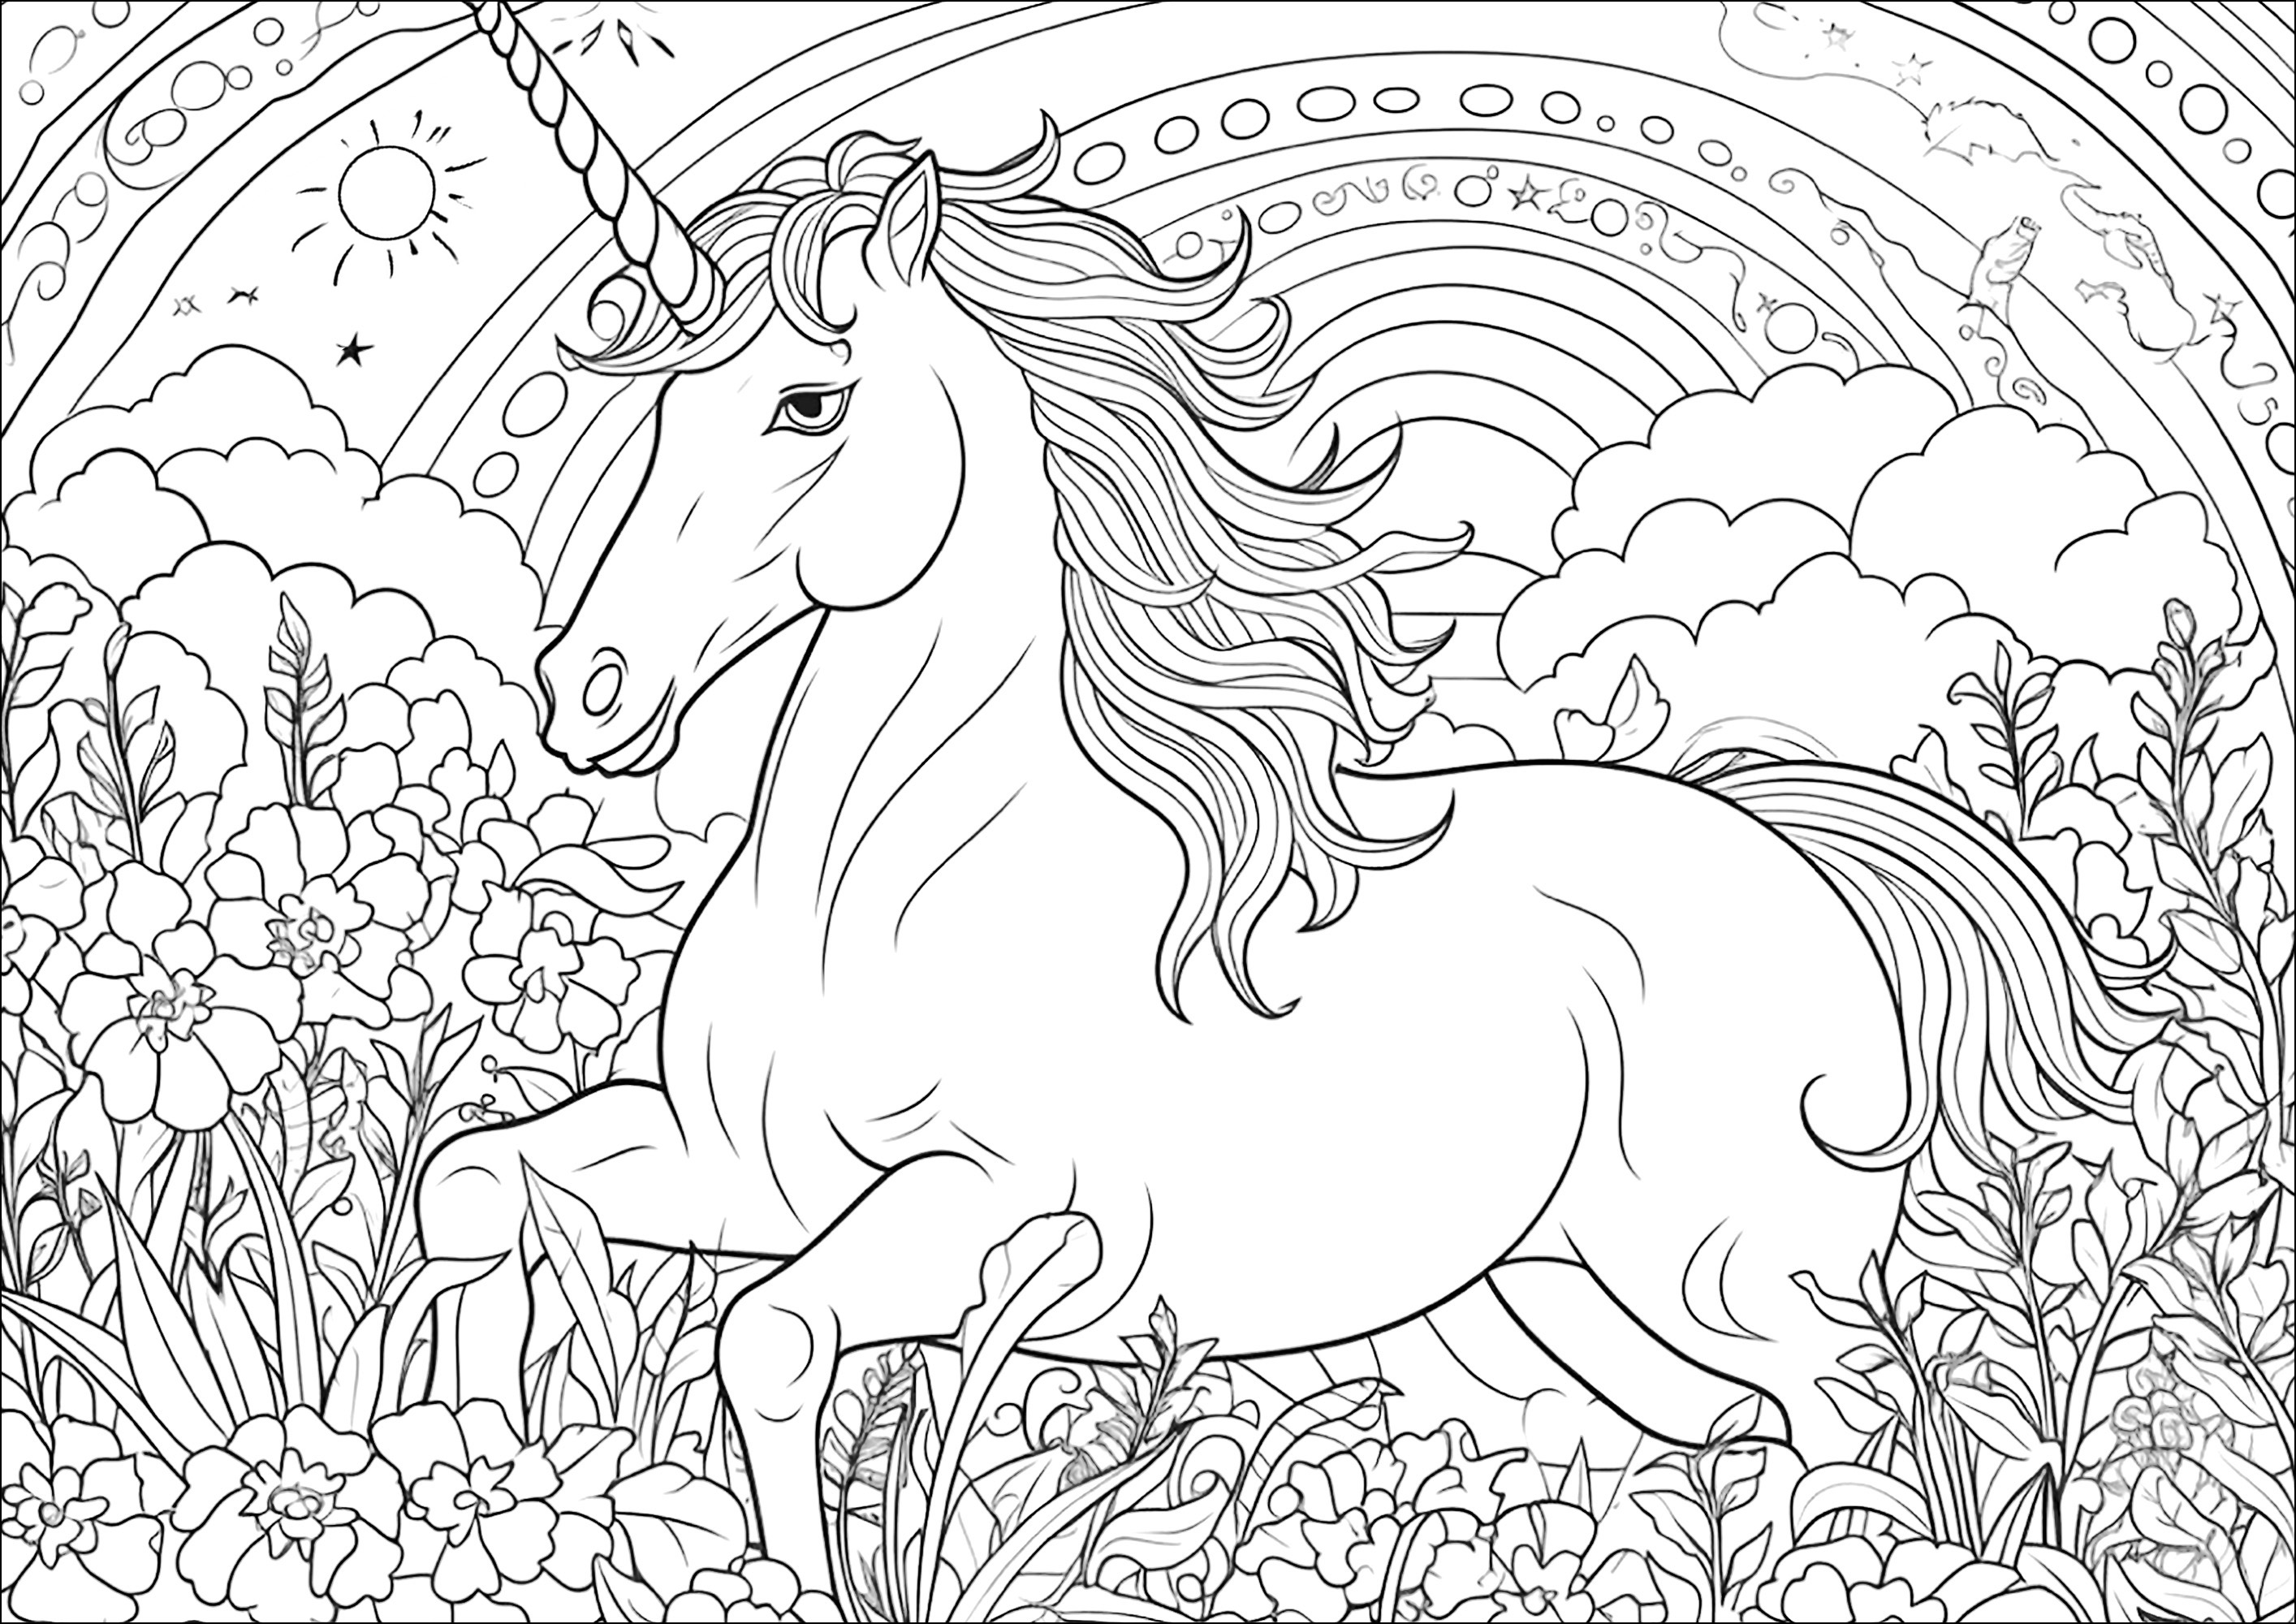 Galloping unicorn with rainbow and vegetation